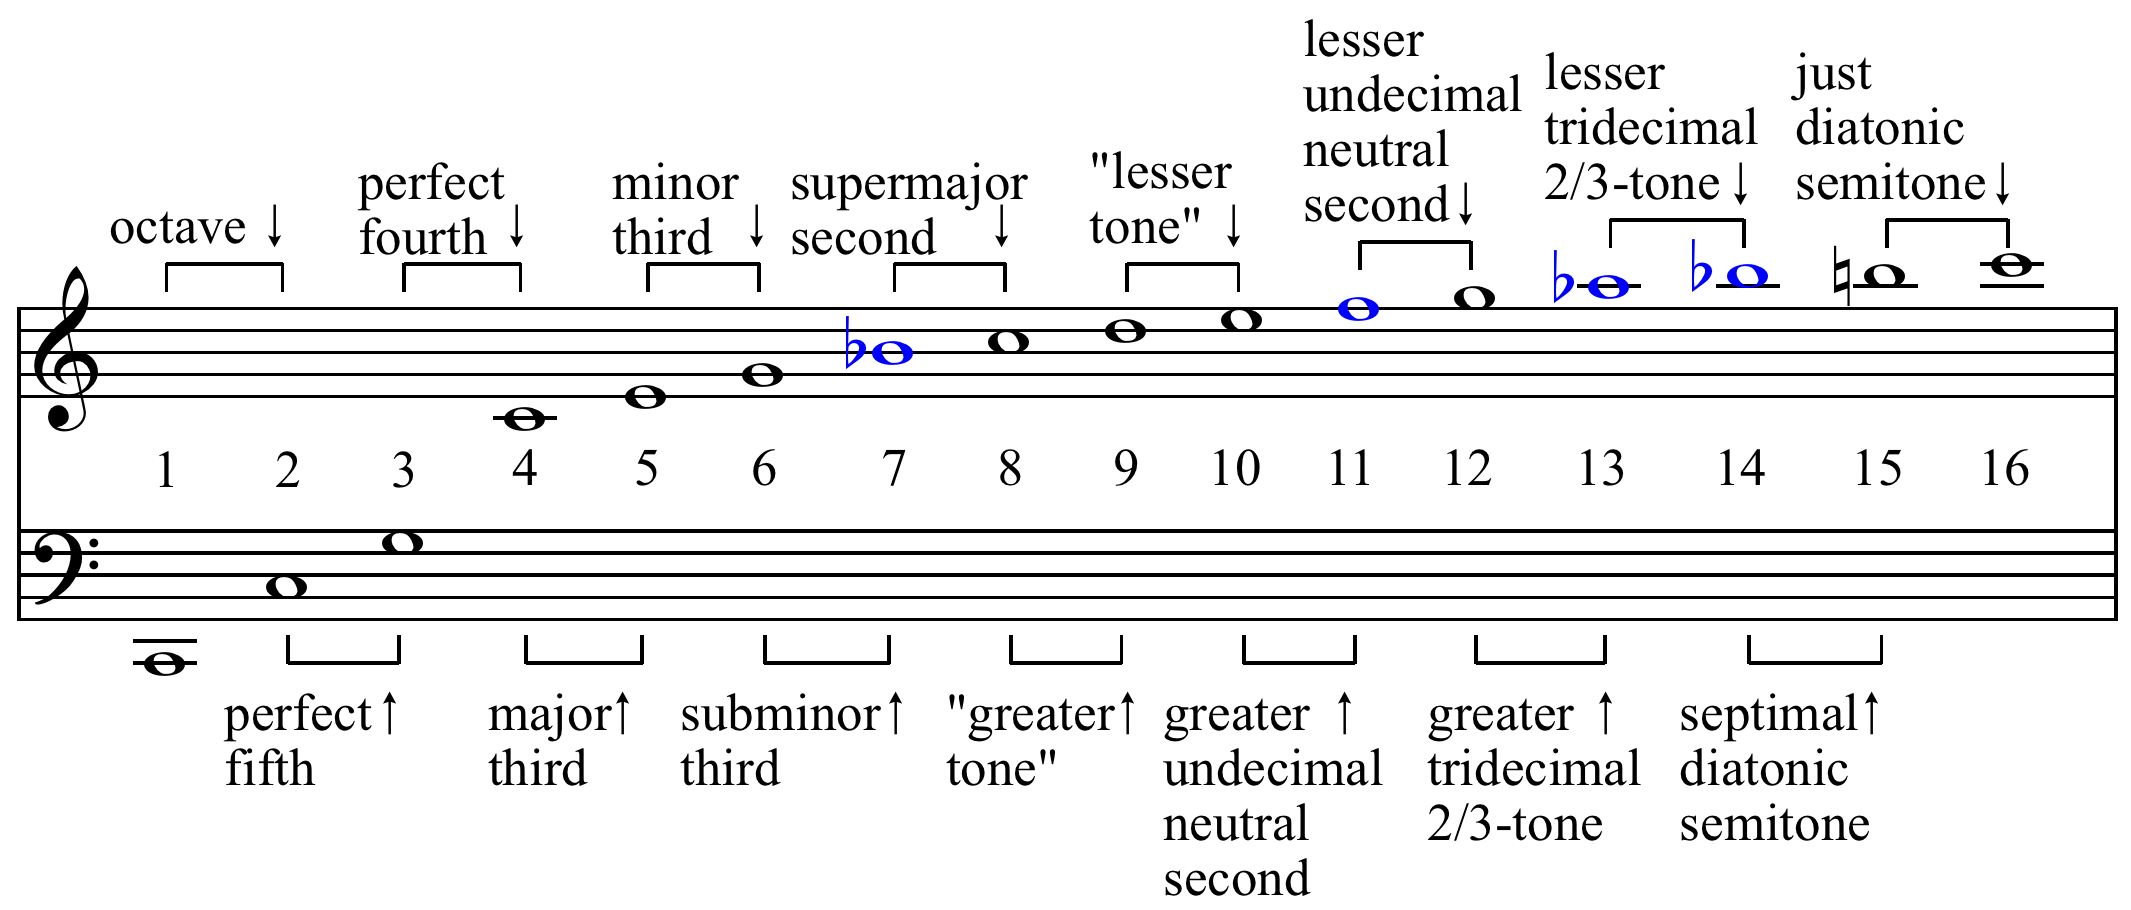 harmonic series intervals - آموزش تئوری موسیقی آنلاین و حضوری